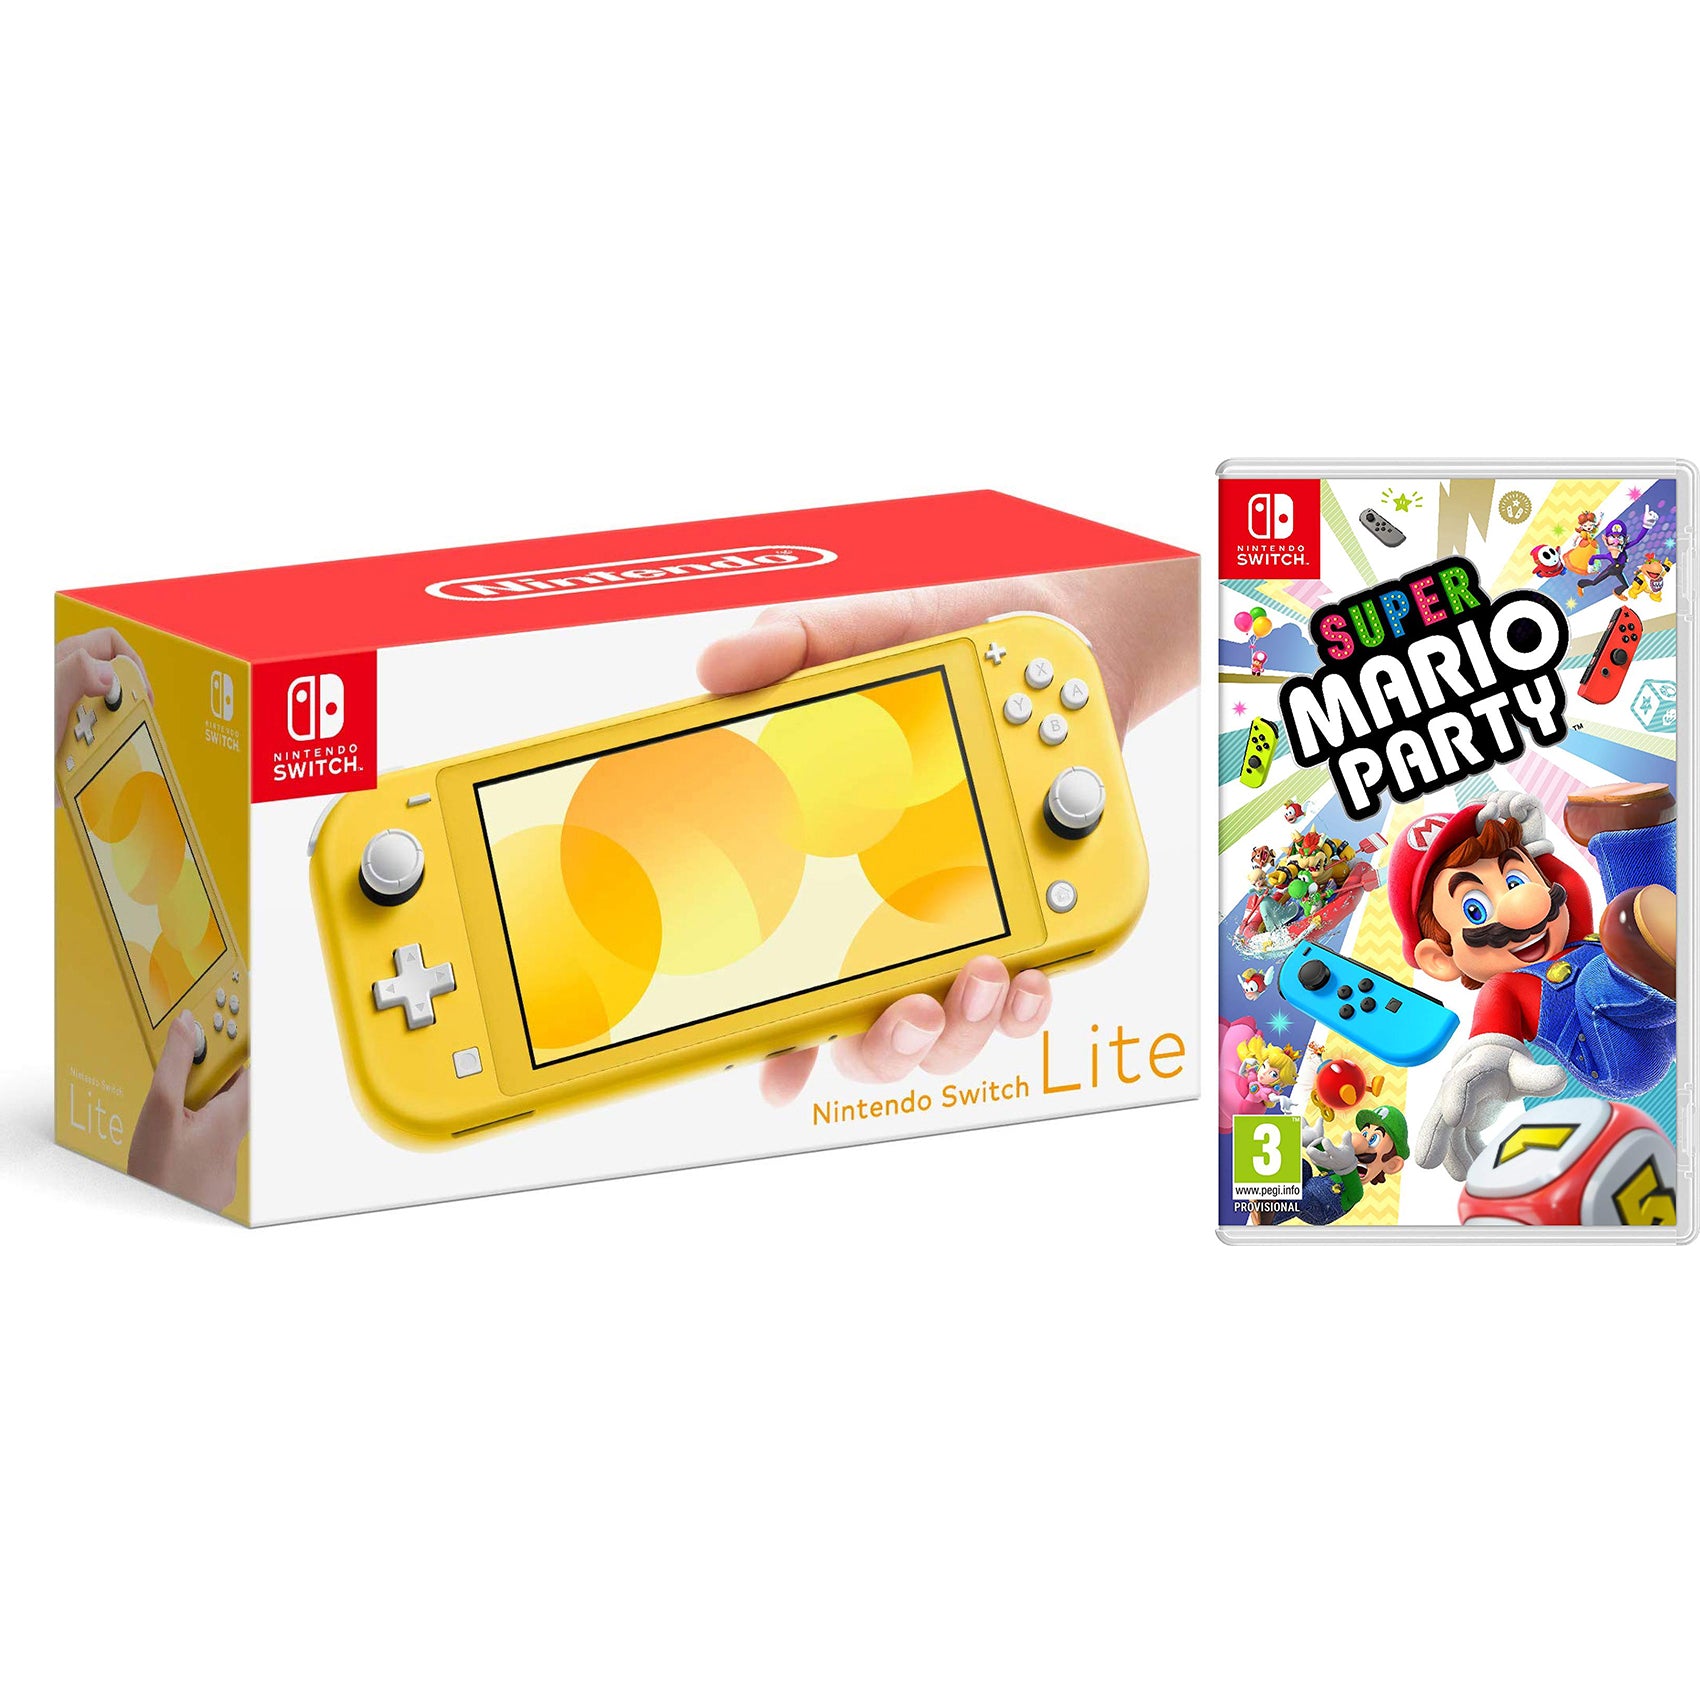 Nintendo Switch Lite 32GB Yellow and Mario Party Bundle - Pro-Distributing